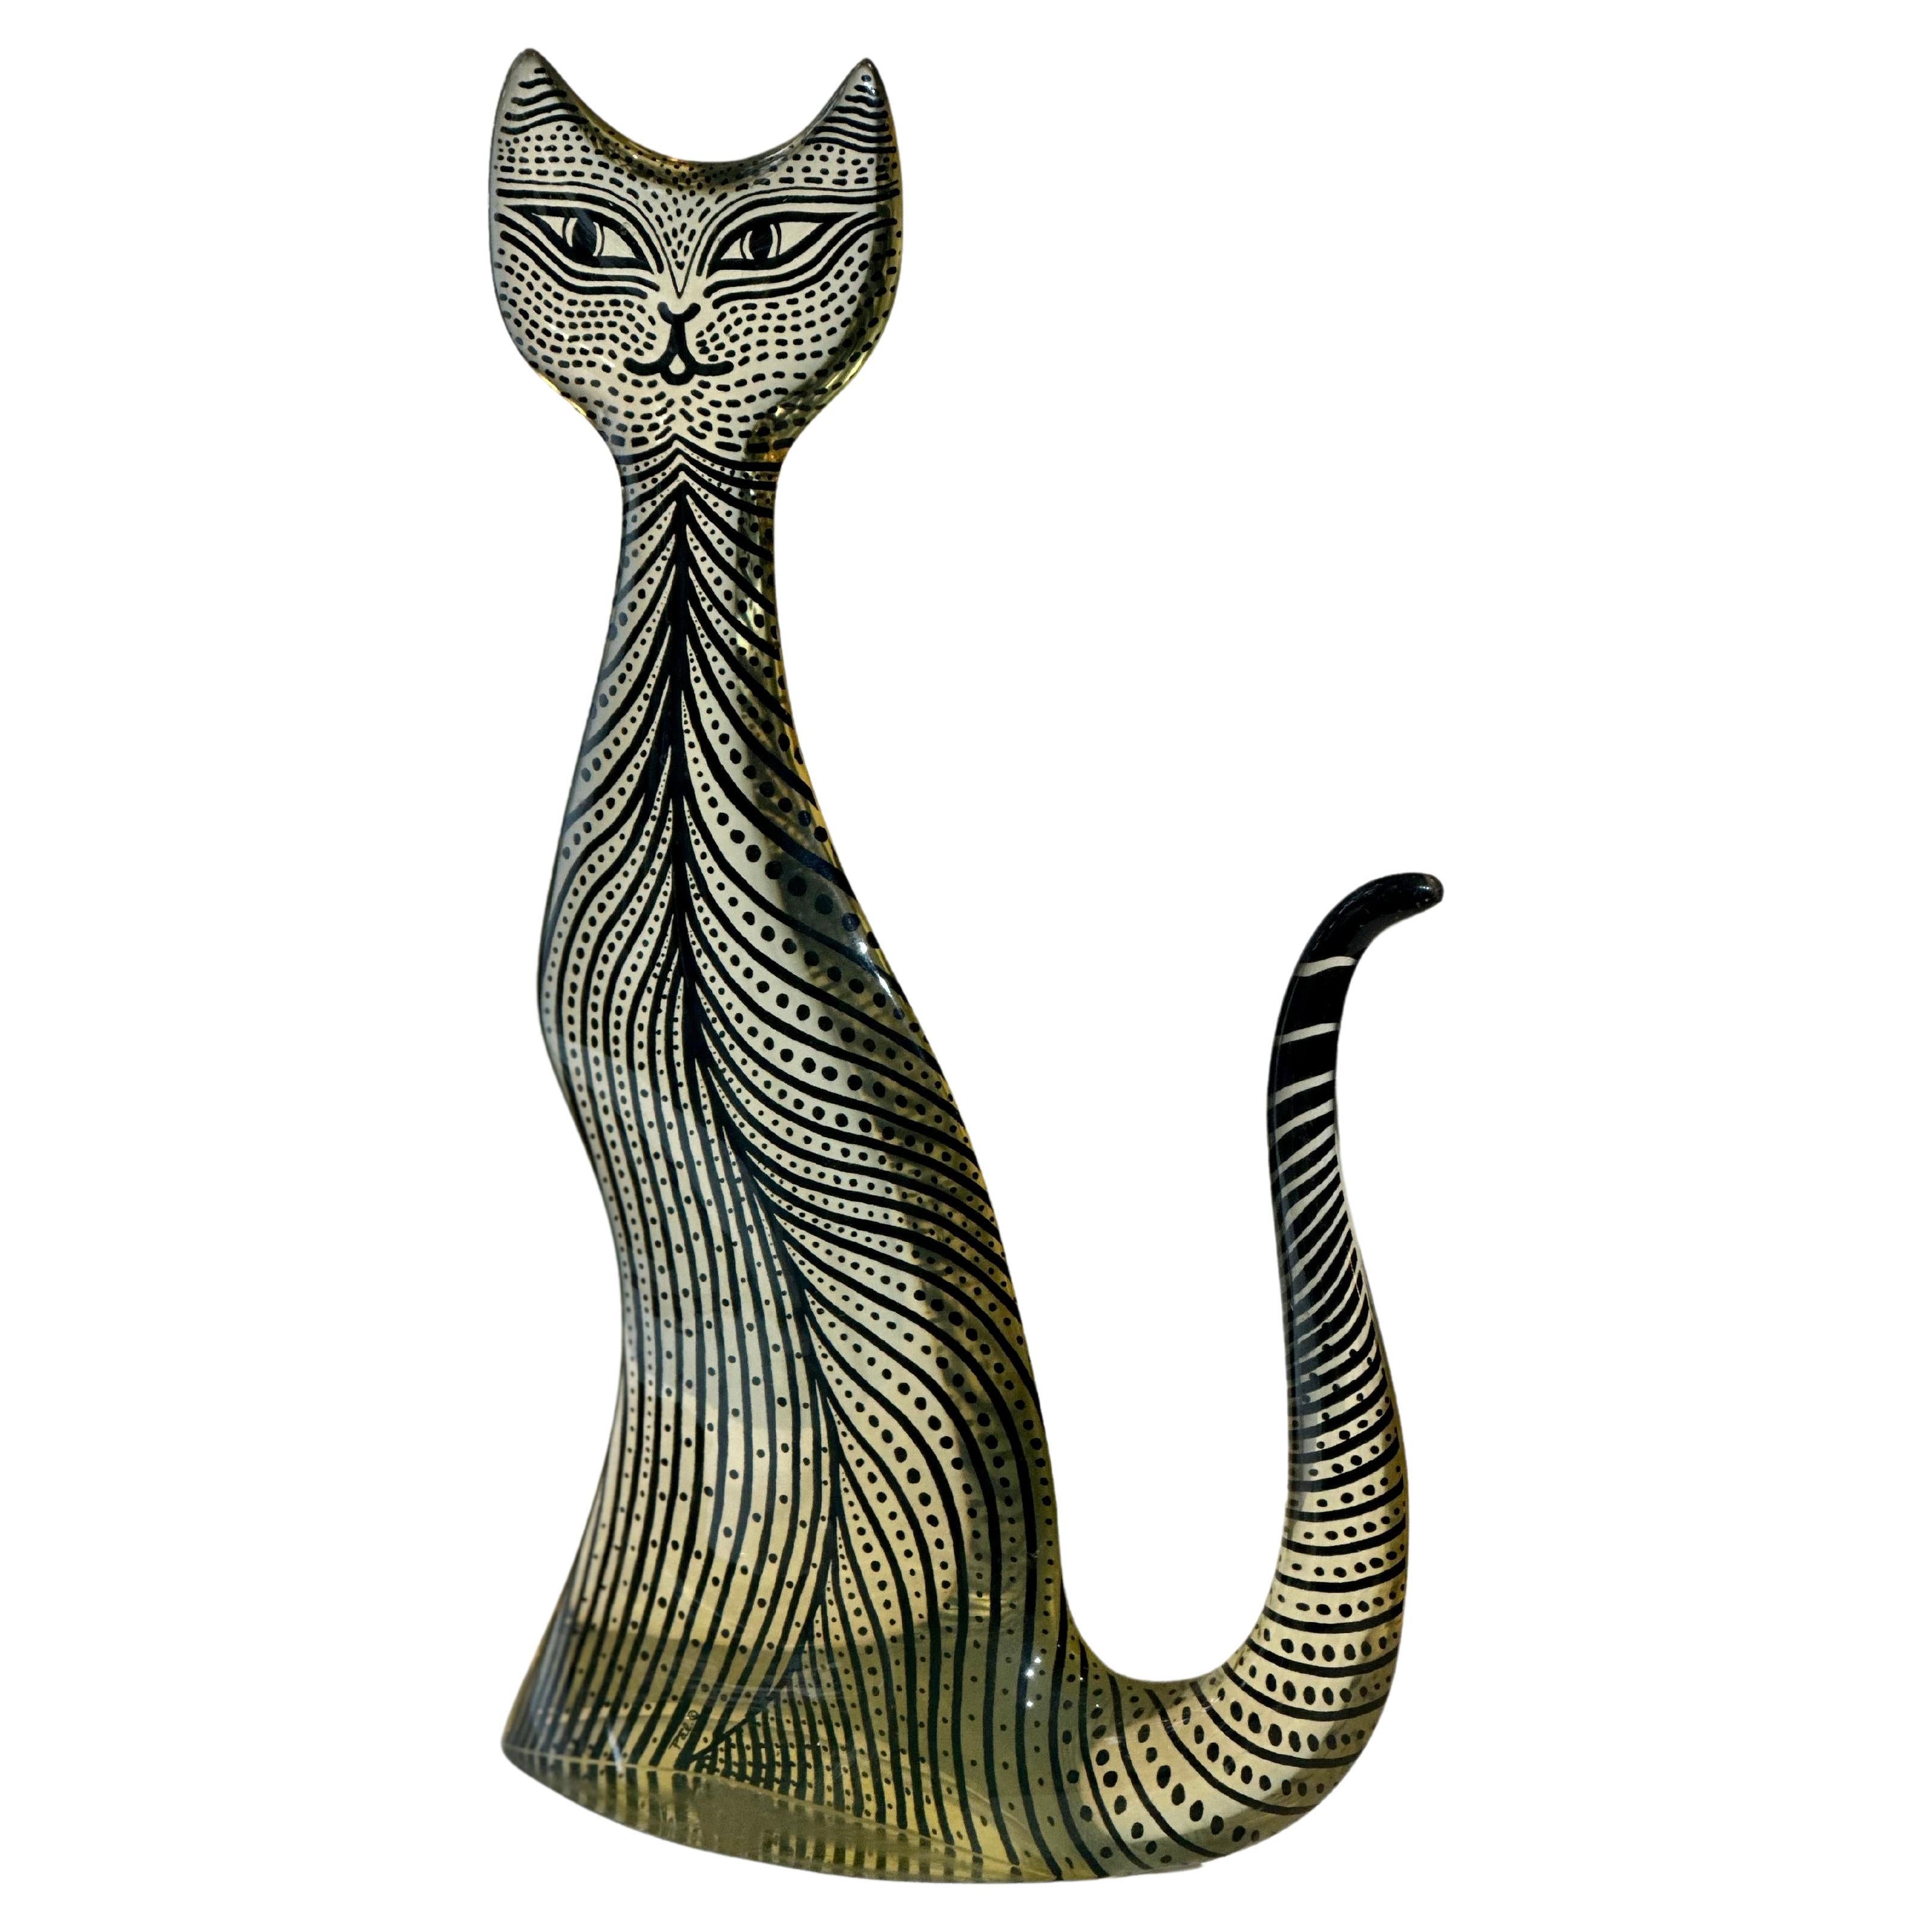 Abraham Palatnik. Op Art Cat Sculpture in Polyester Resin 1970's